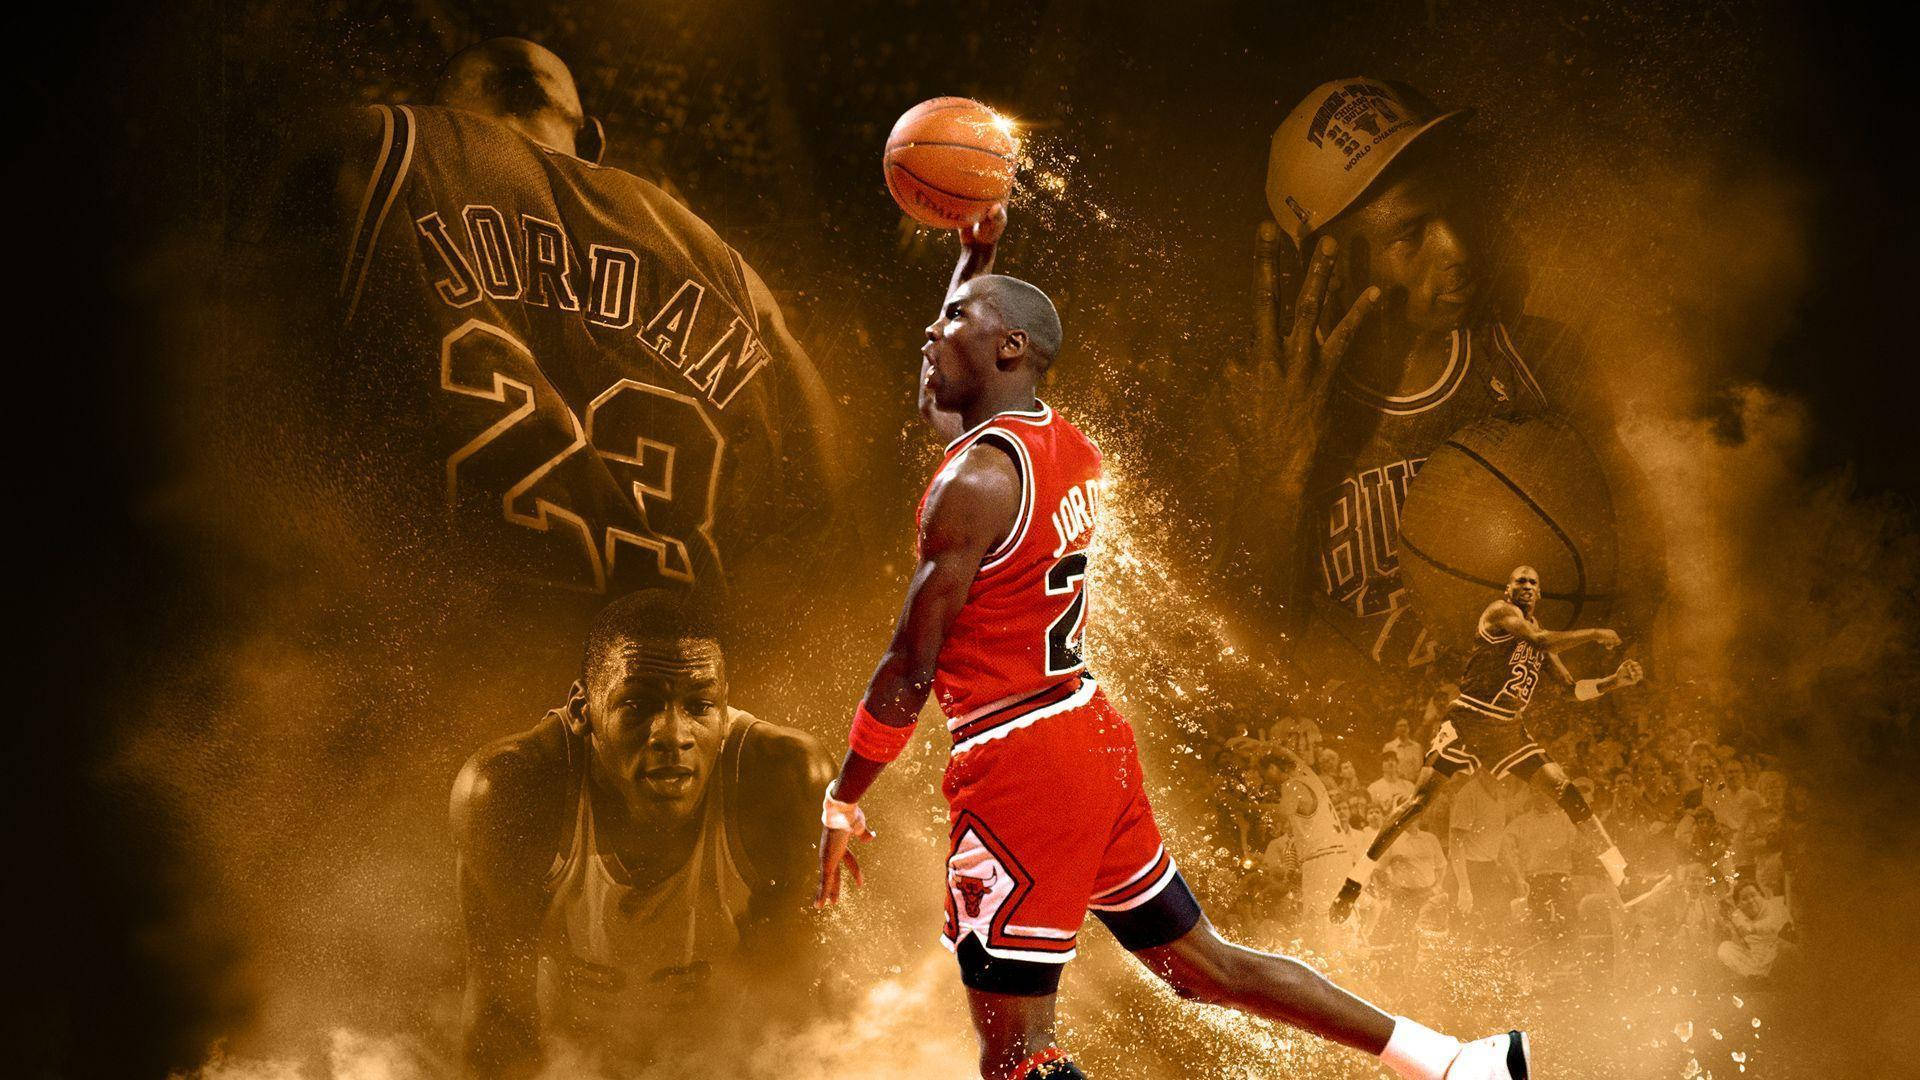 Hd Basketball Michael Jordan